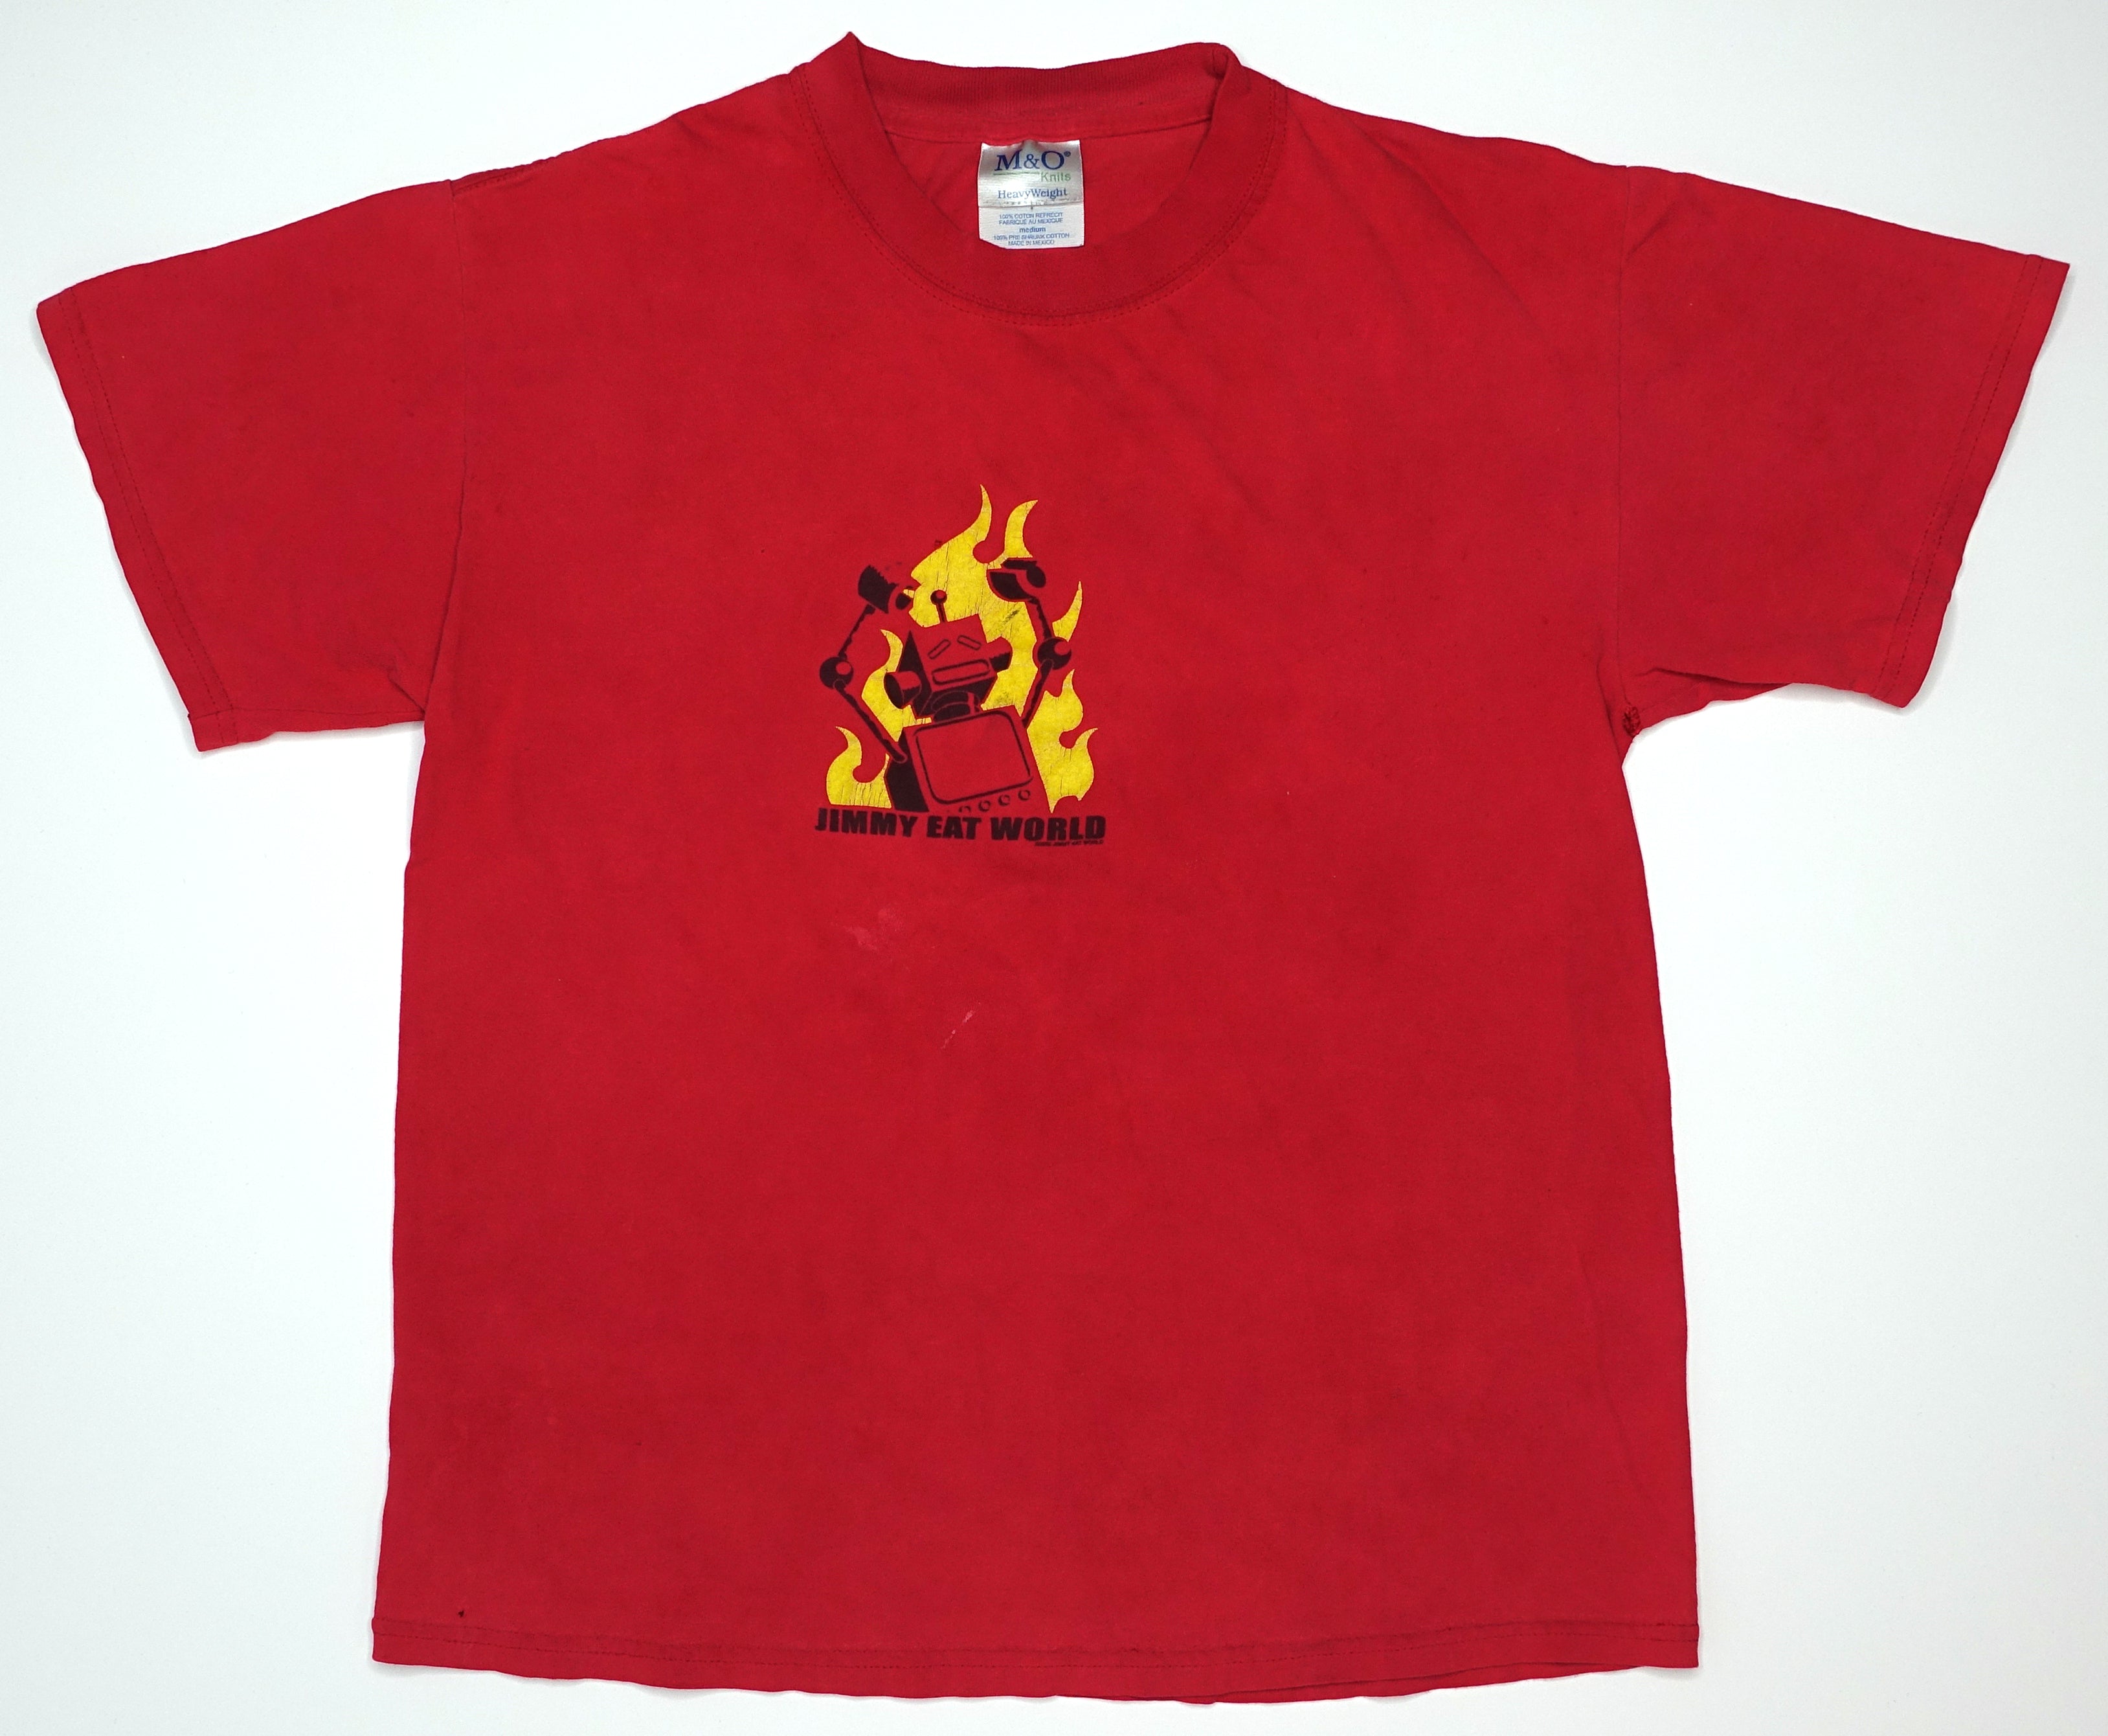 Jimmy Eat World - Flaming Robot USA 2002 Tour Shirt Size Medium